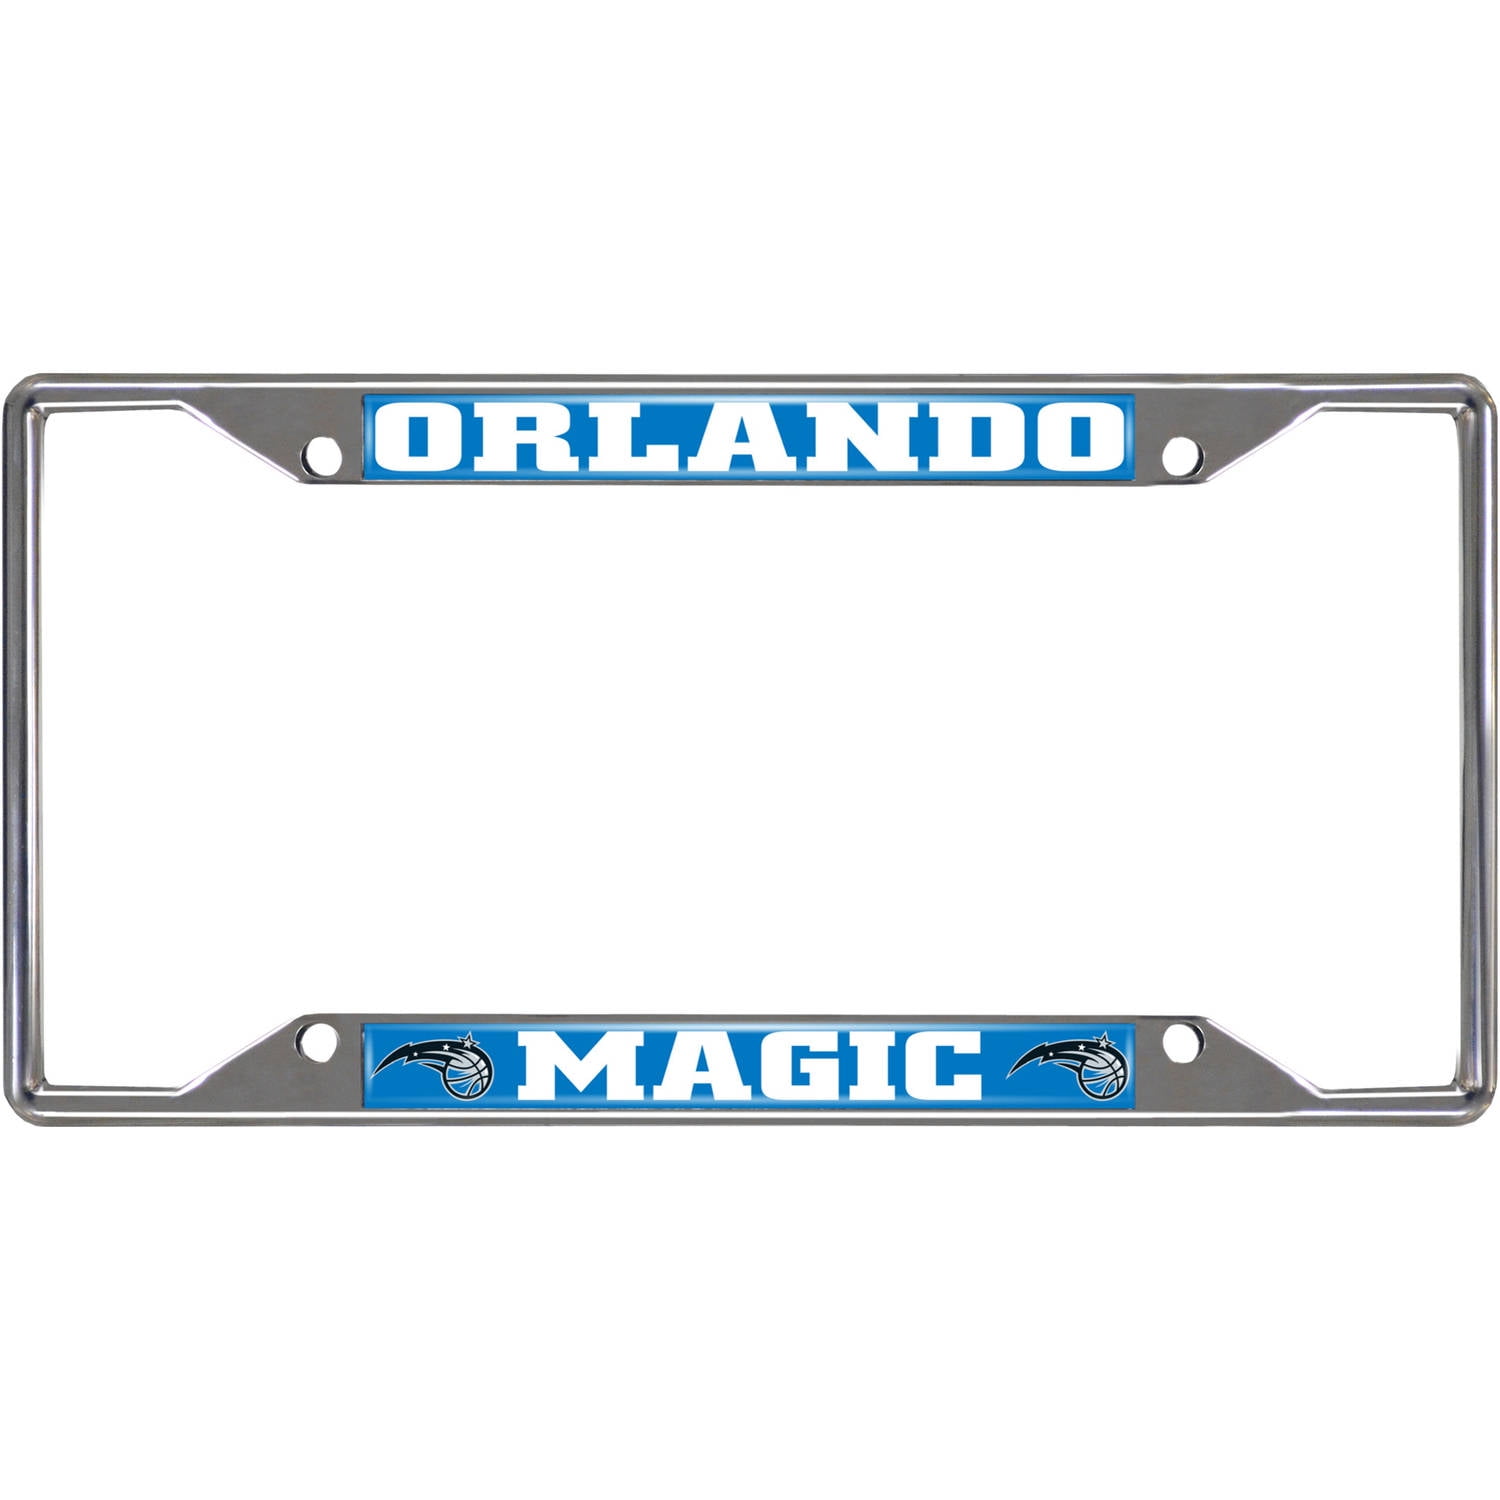 Las Vegas Raiders License Plate Frame Custom Made of Chrome 